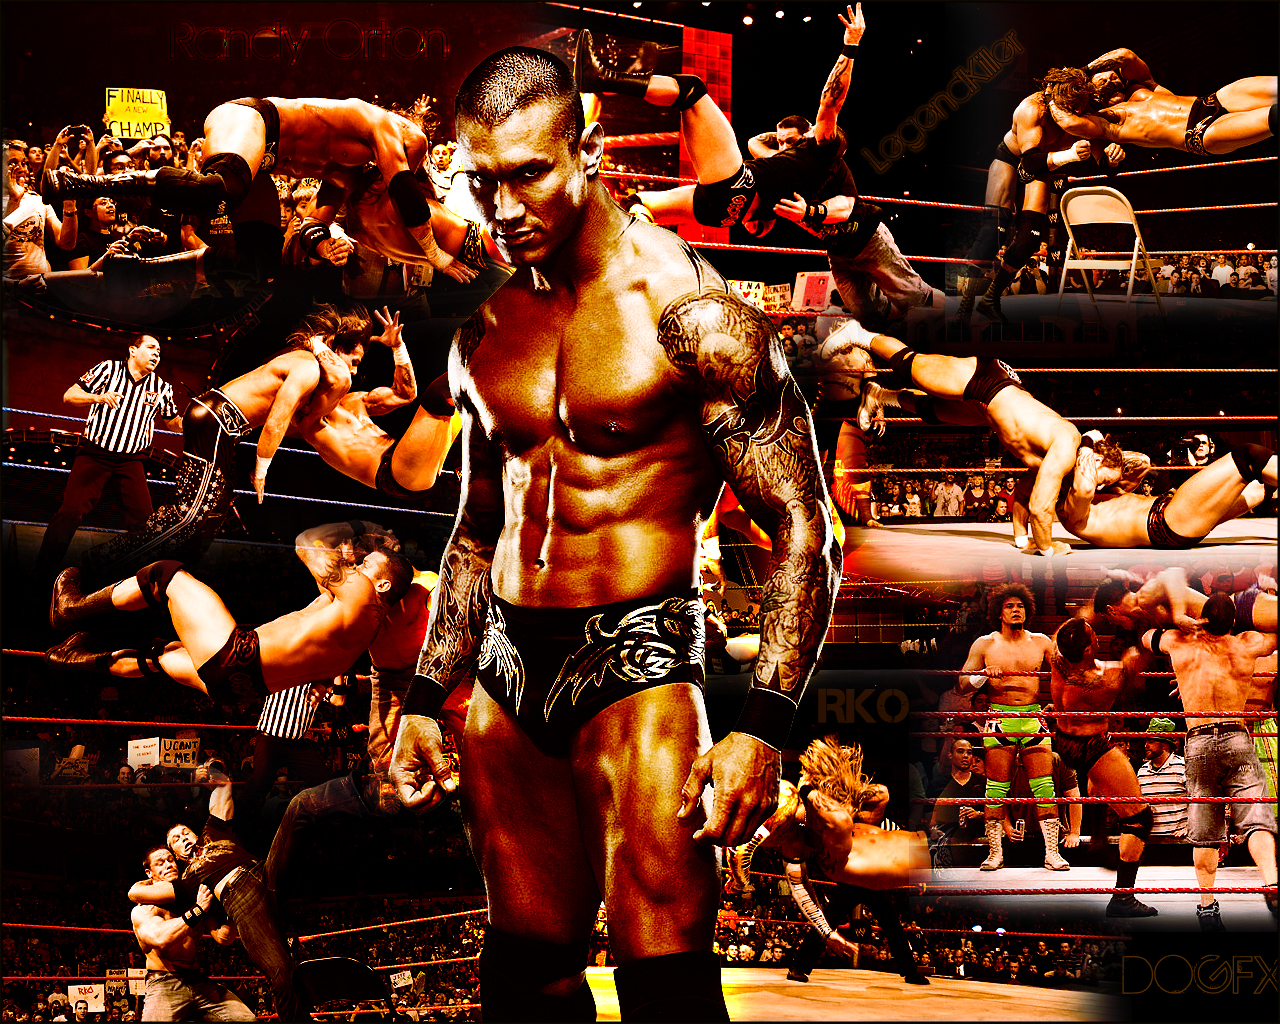 http://4.bp.blogspot.com/-bDSMRBxbReo/TejVUaOnEsI/AAAAAAAAAEA/OqK8ZvL9yrU/s1600/WWE-Randy-Orton-Wallpaper1.jpg